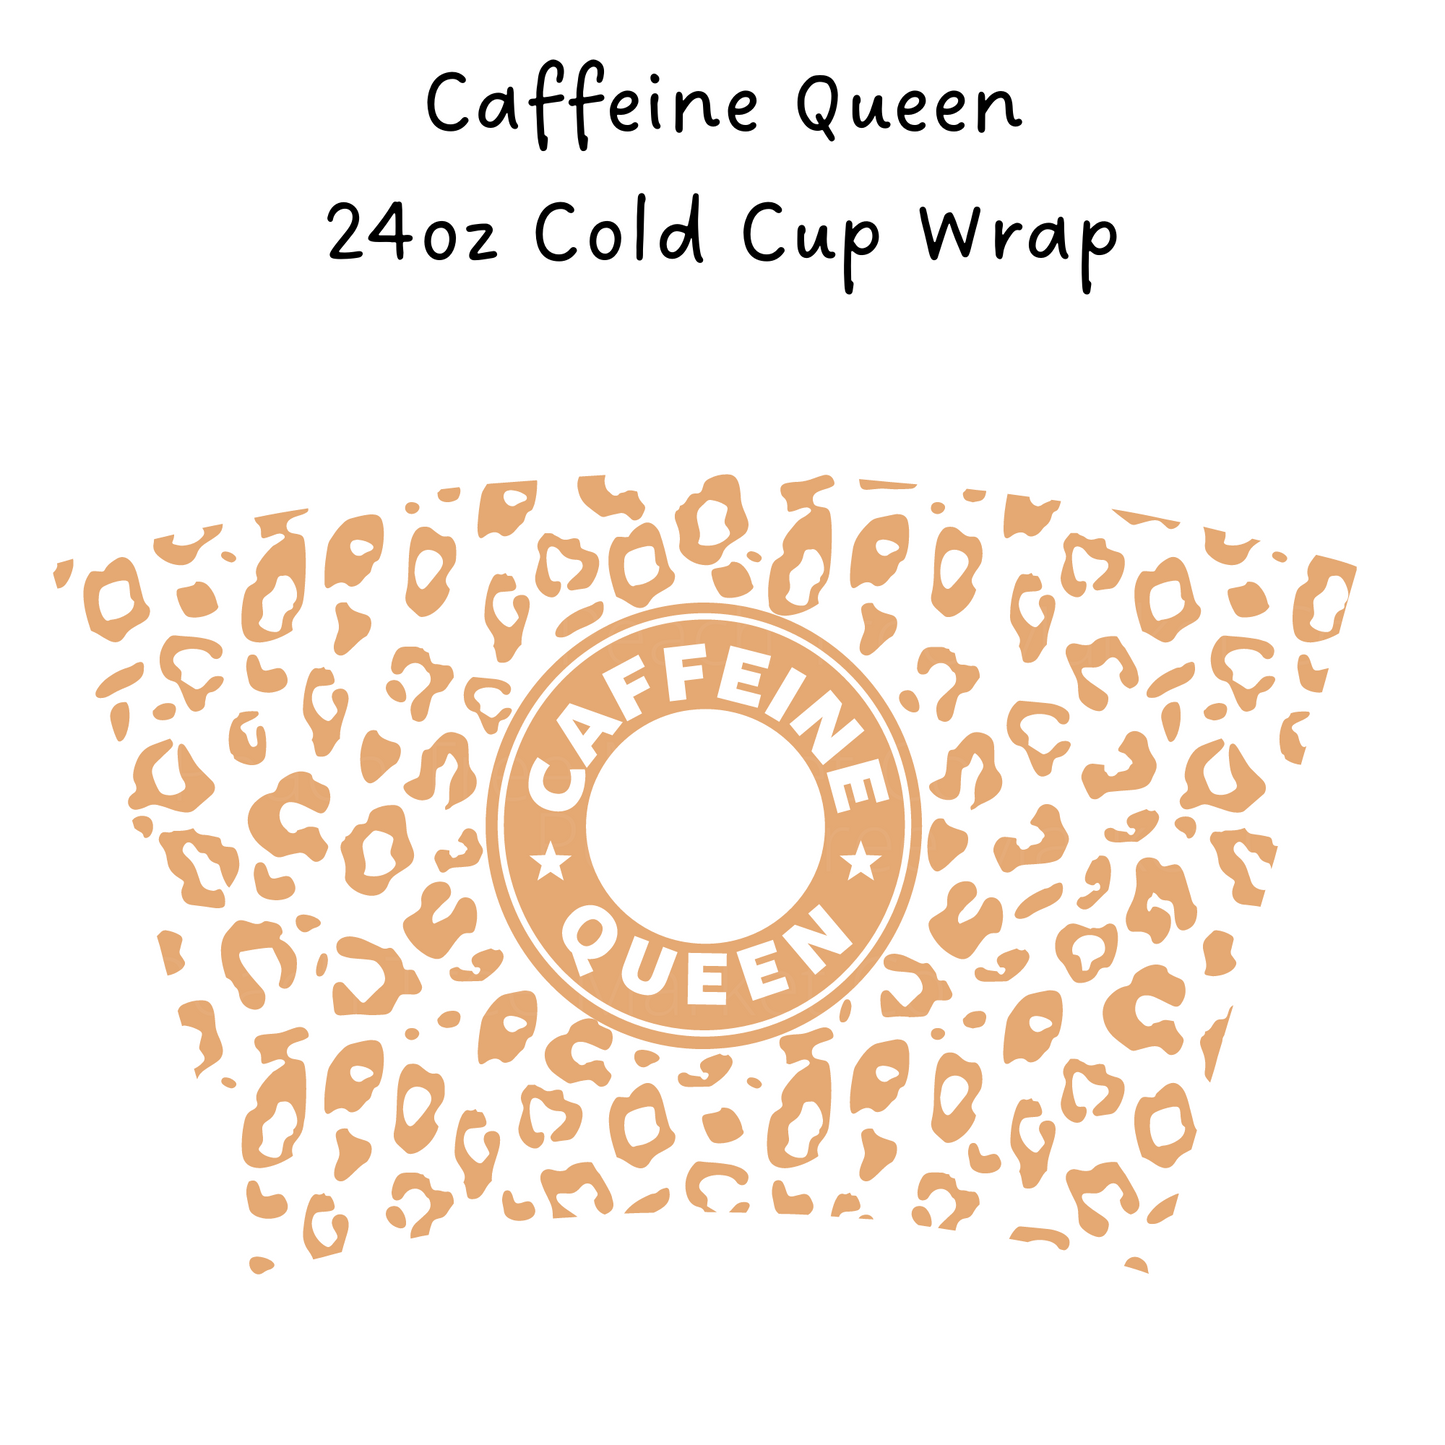 Caffeine Queen 24oz Cold Cup Wrap